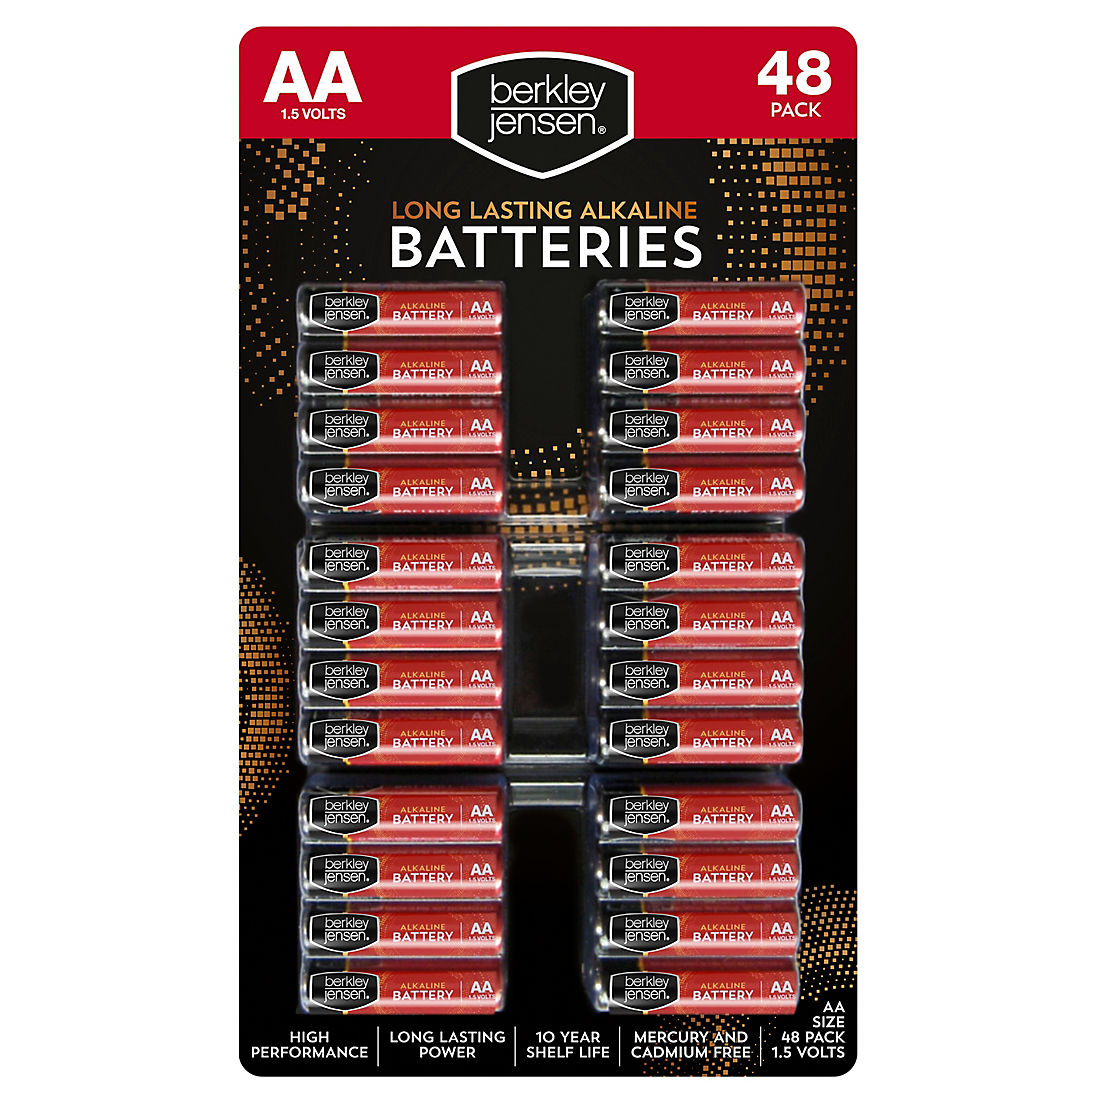 transmissie Trots Blauw Berkley Jensen AA Alkaline Batteries, 48 ct. - BJs Wholesale Club